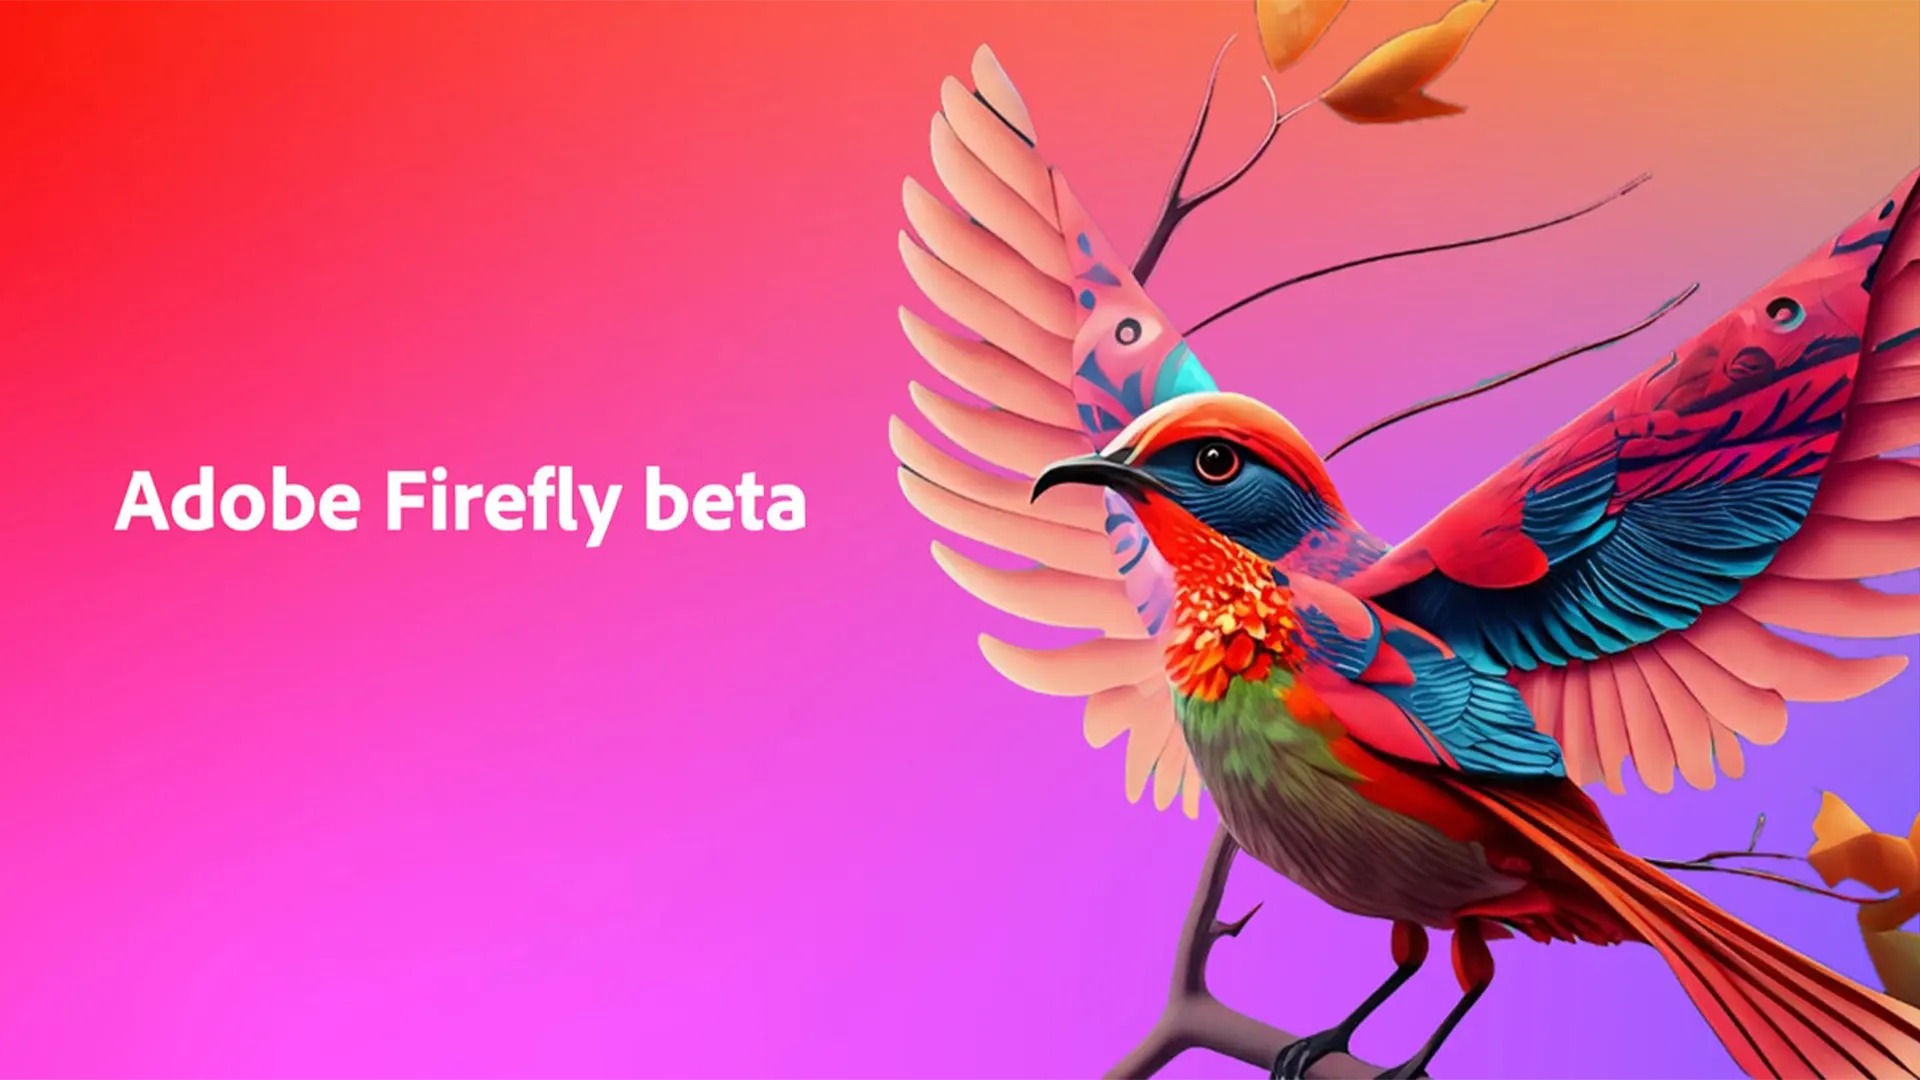 Adobe Firefly - The best AI art generator for designers